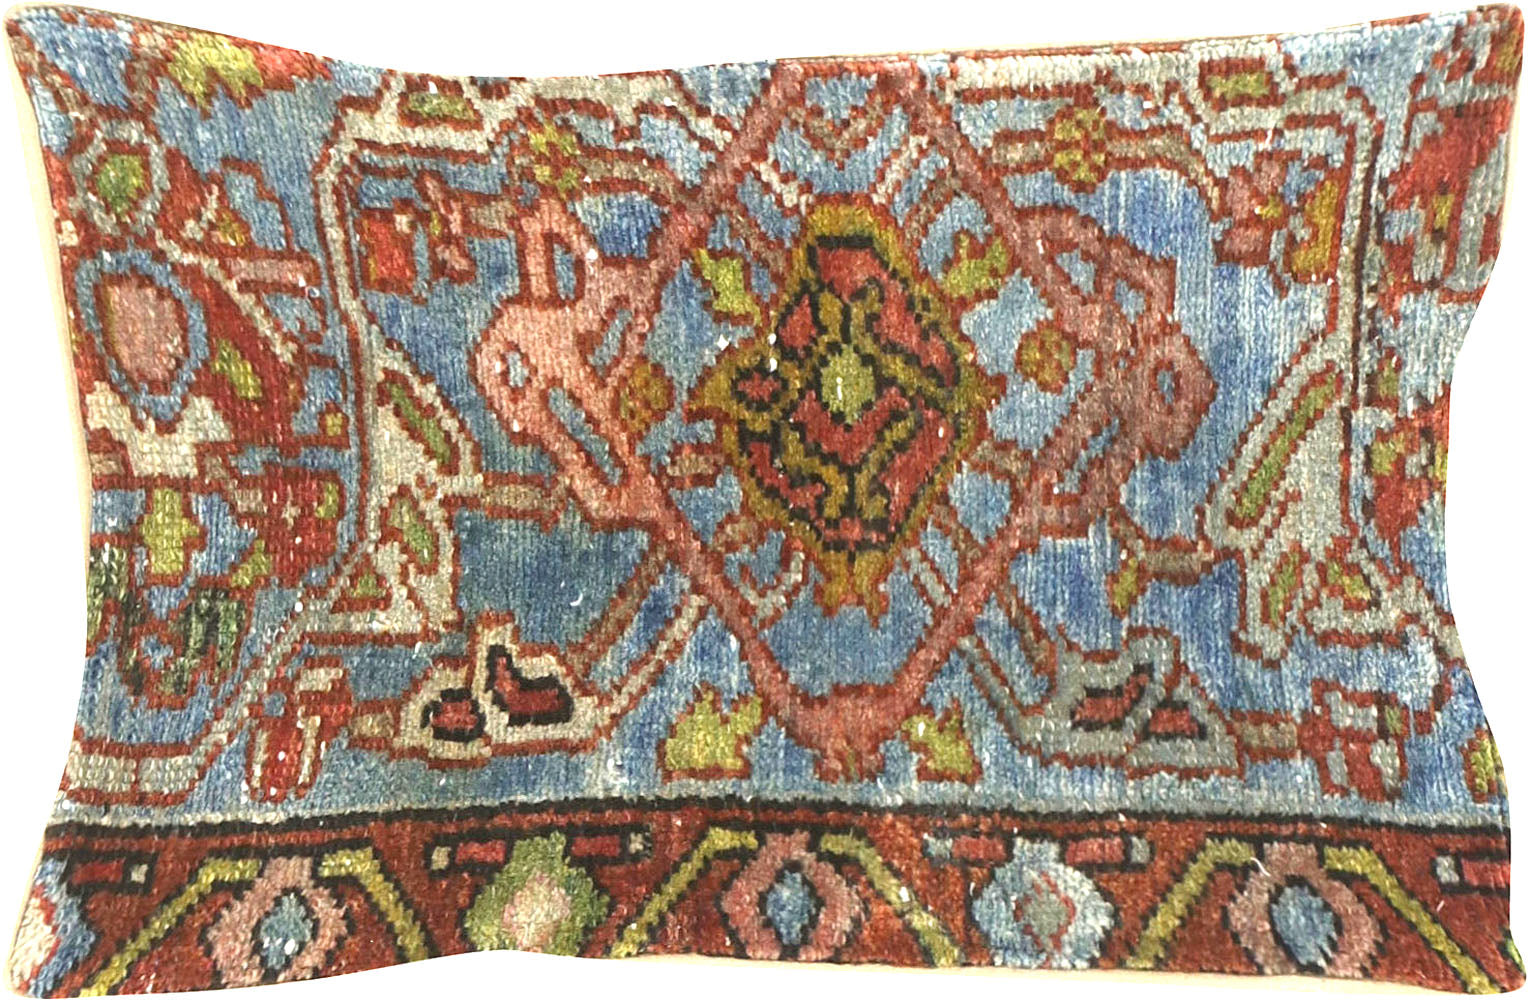 Vintage Persian Melayer Pillow - 12" x 20"